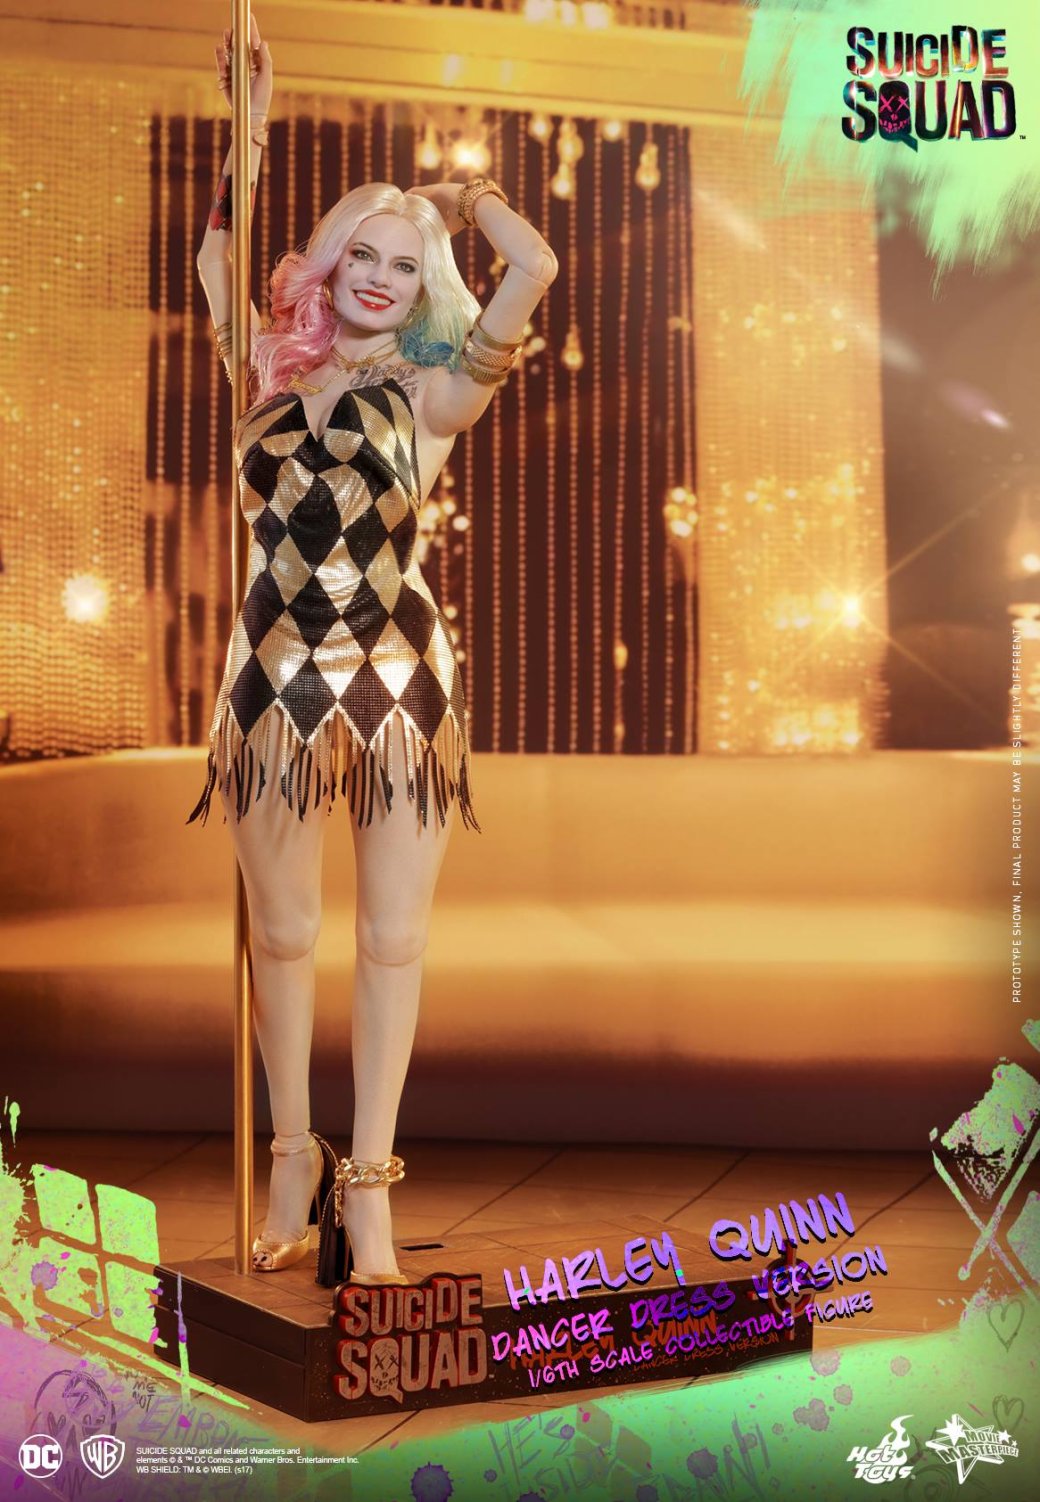 Фигурка Харли Квинн-танцовщицы выглядит как кукла Барби. - Изображение 3